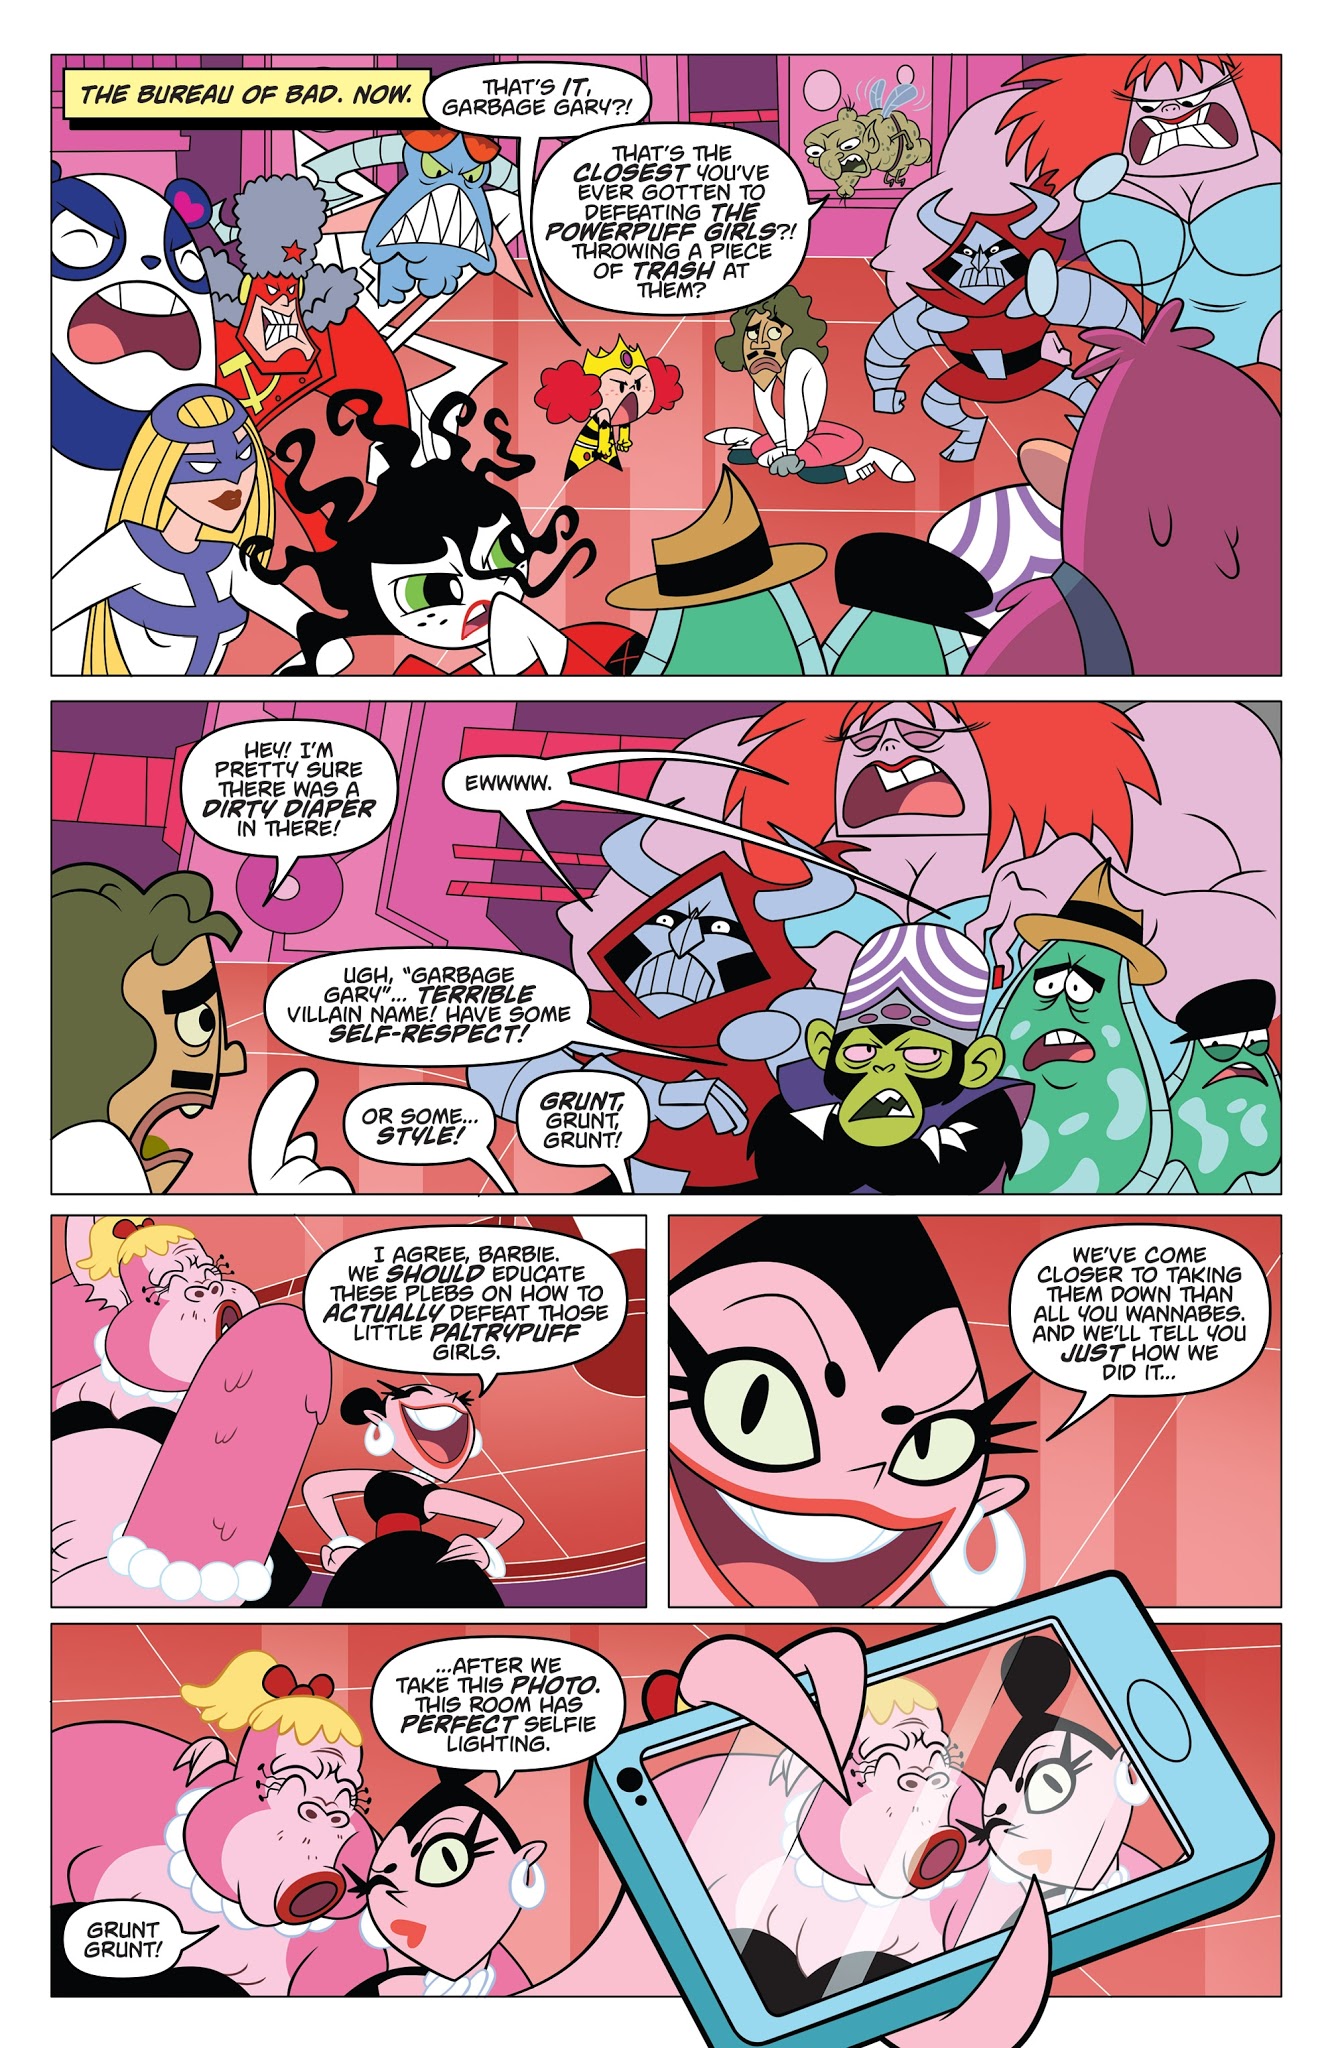 Read online The Powerpuff Girls: Bureau of Bad comic -  Issue #2 - 5